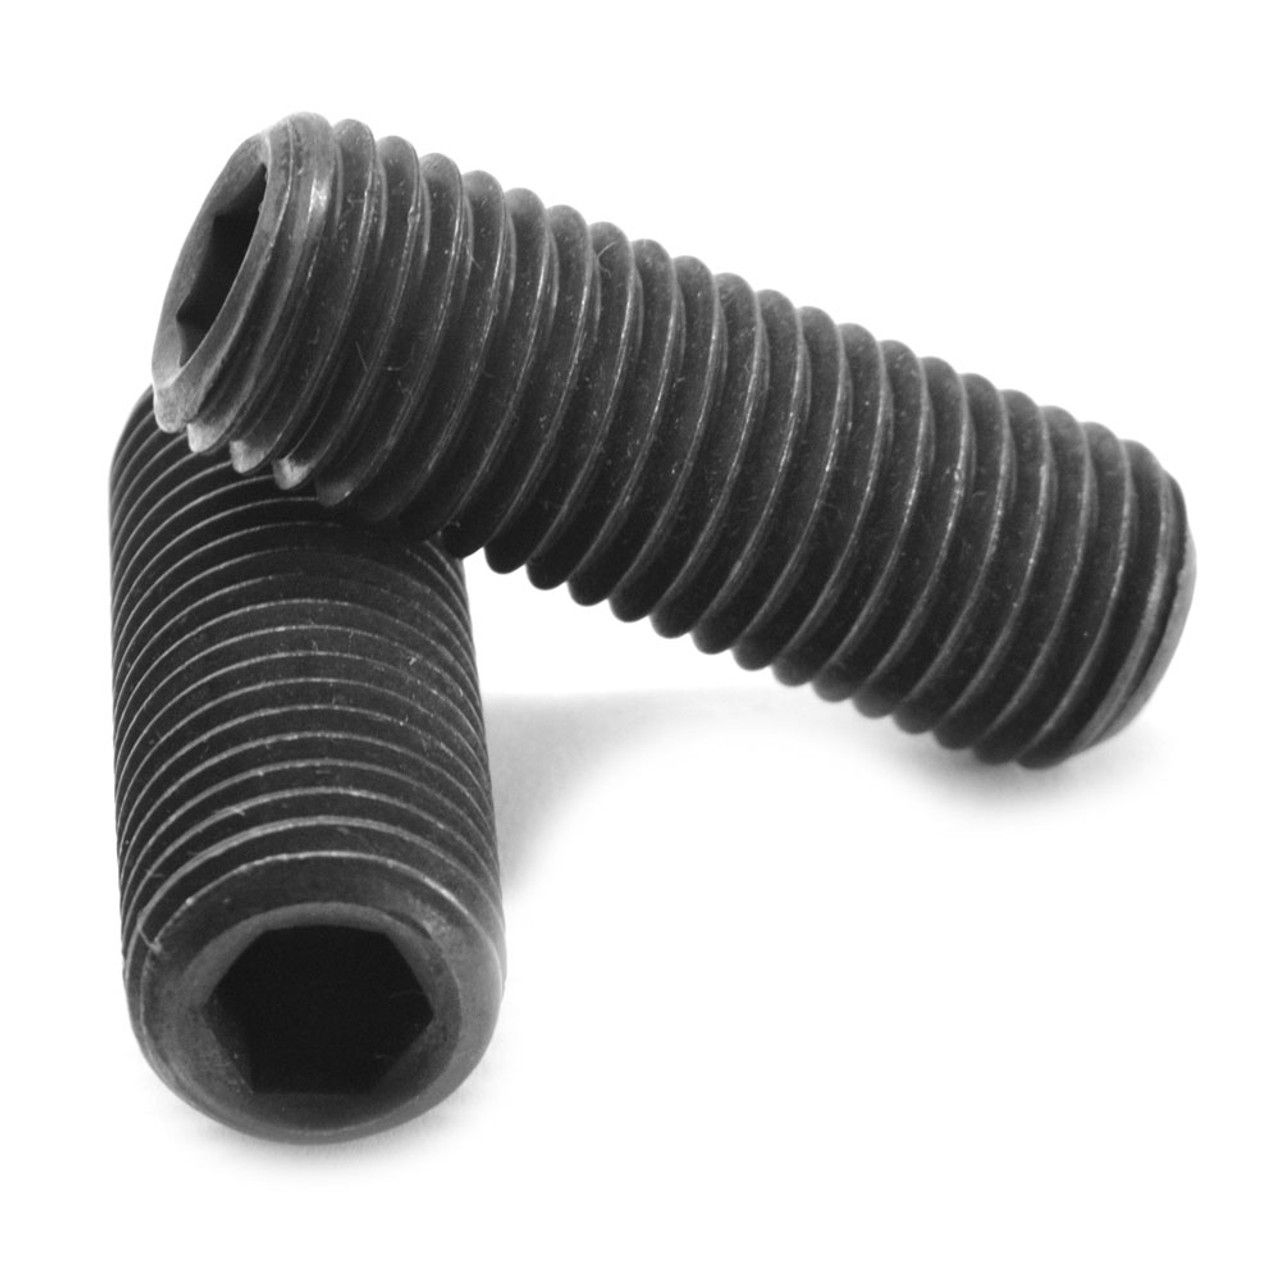 1 1/2"-6 x 1 1/2" Coarse Thread Socket Set Screw Cup Point Alloy Steel Black Oxide